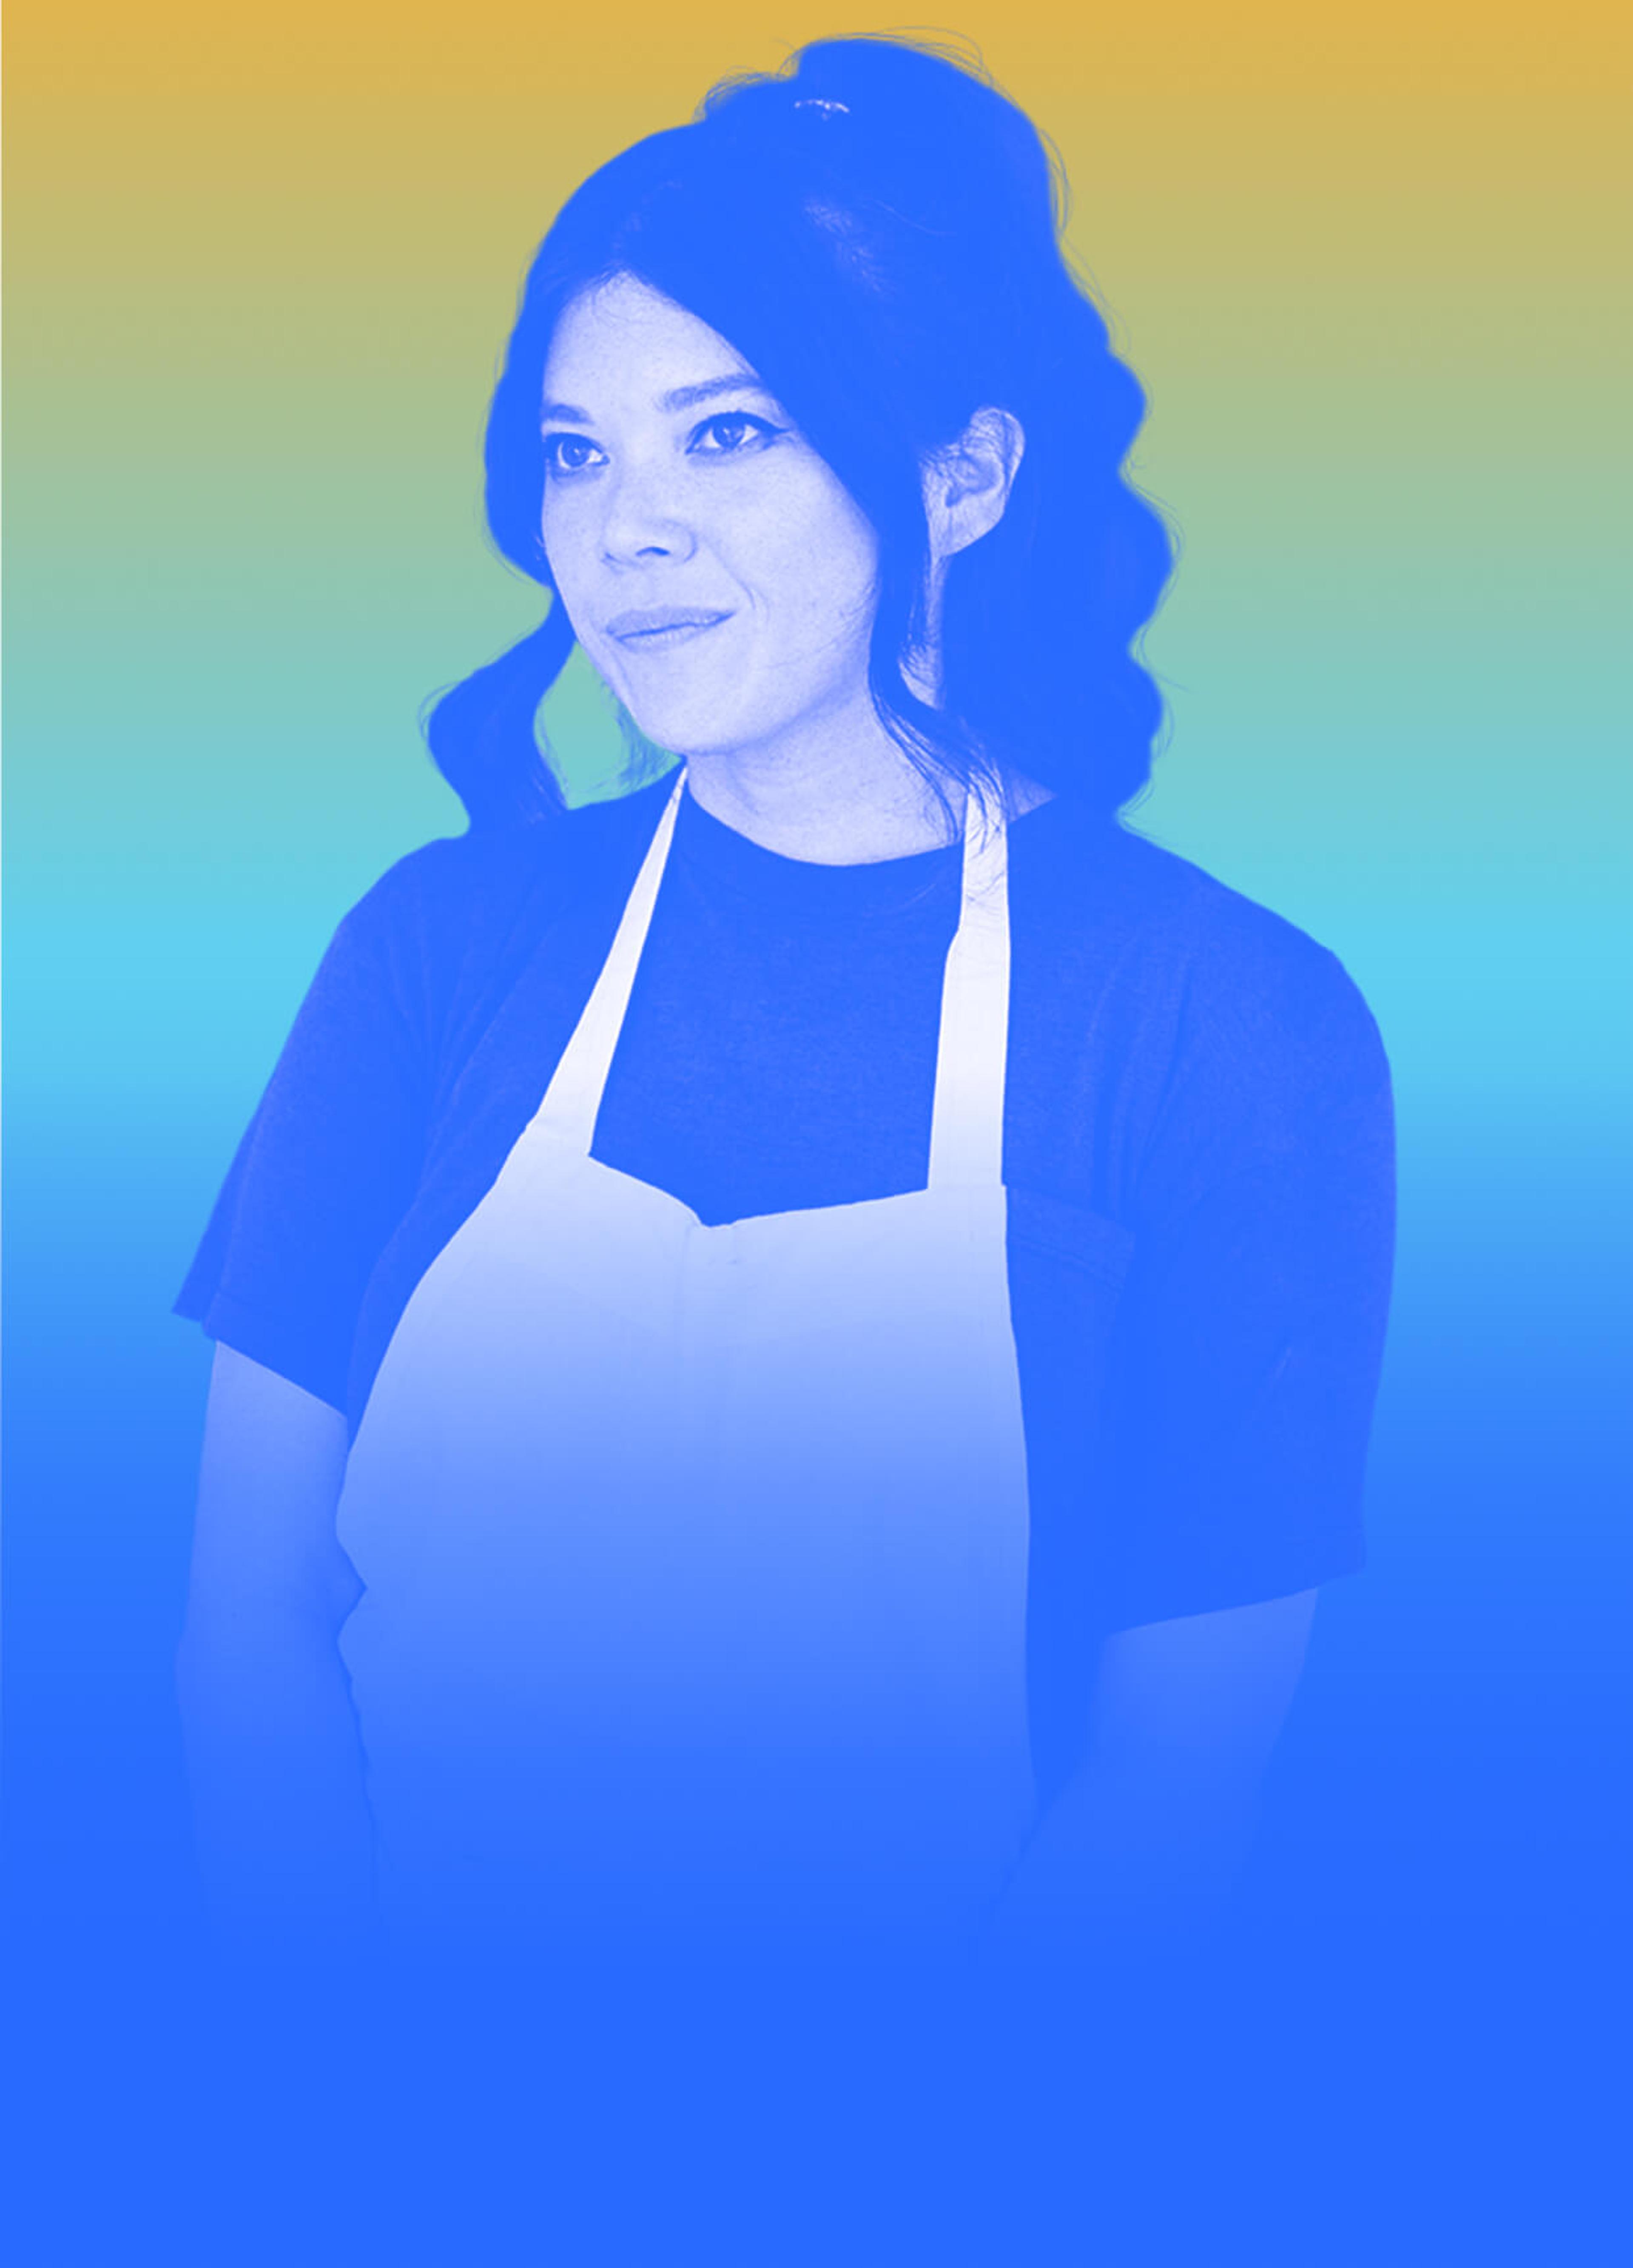 Natasha Pickowicz on why she bakes for pleasure and community.